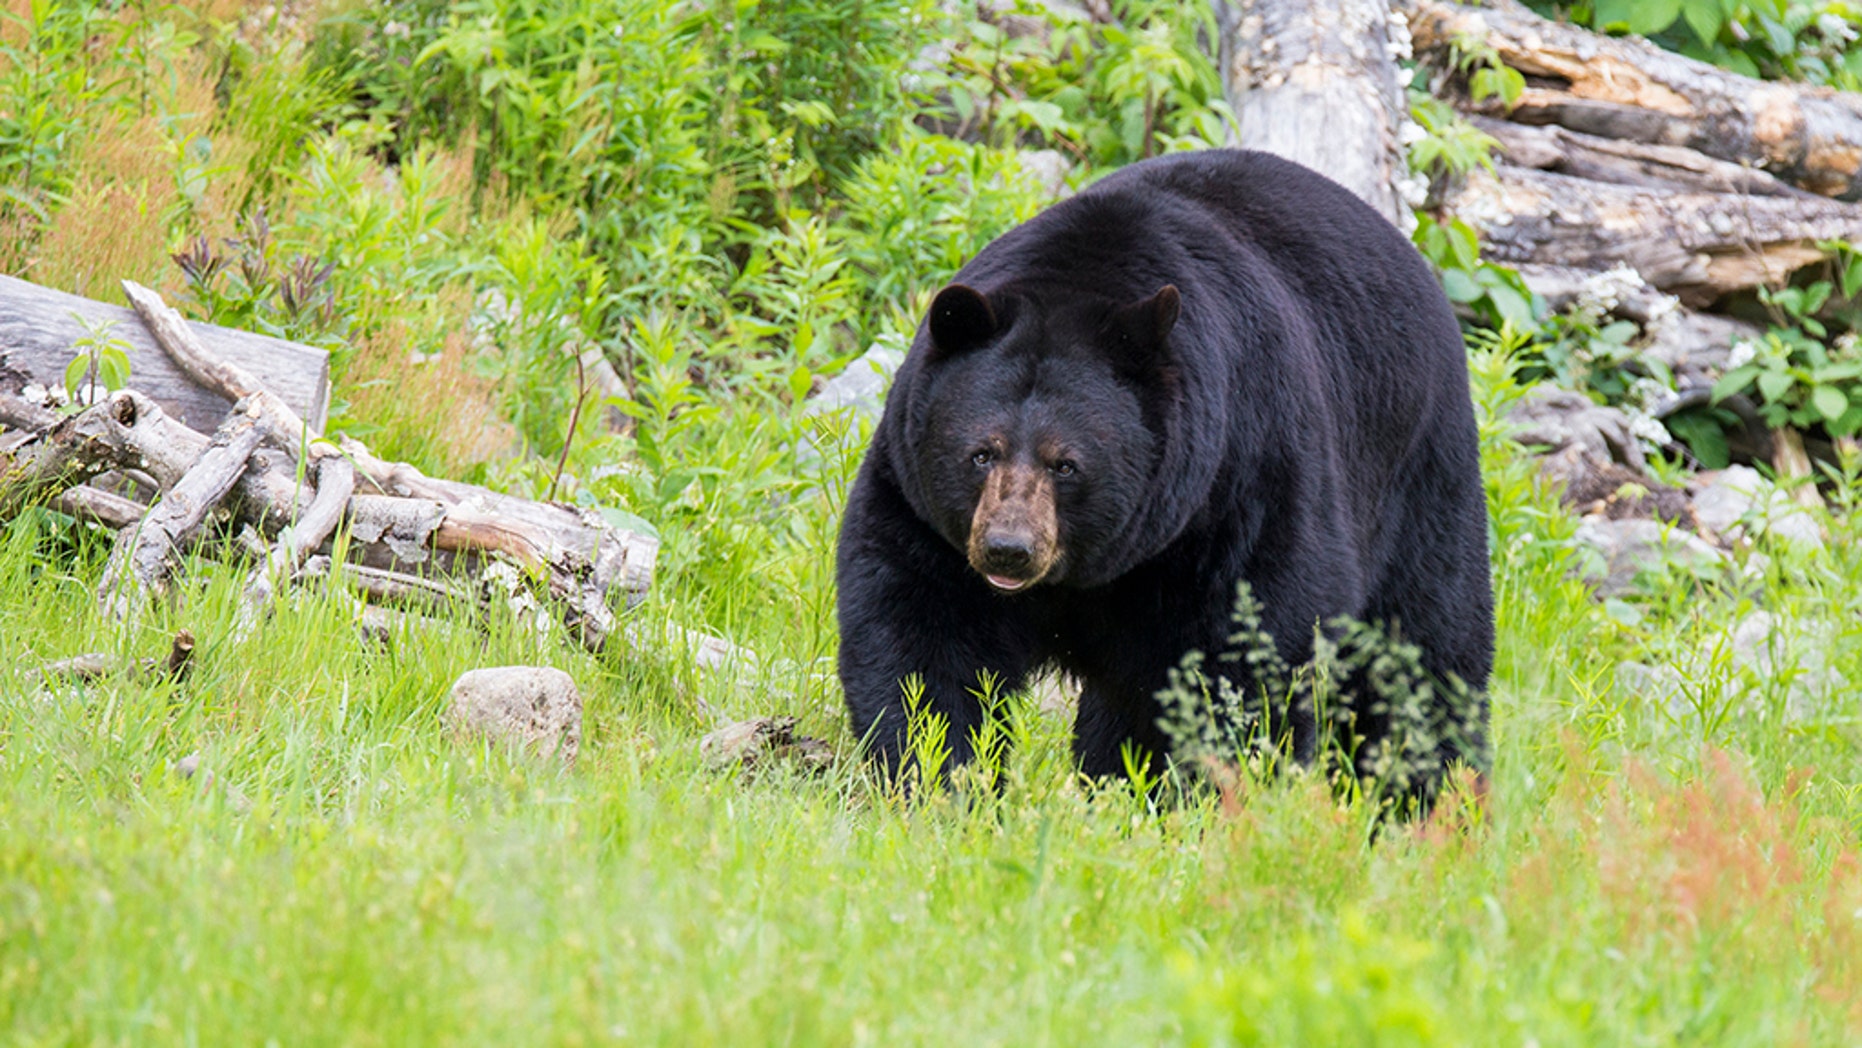 Black bear sightings in Virginia on the rise in light of acorn shortage